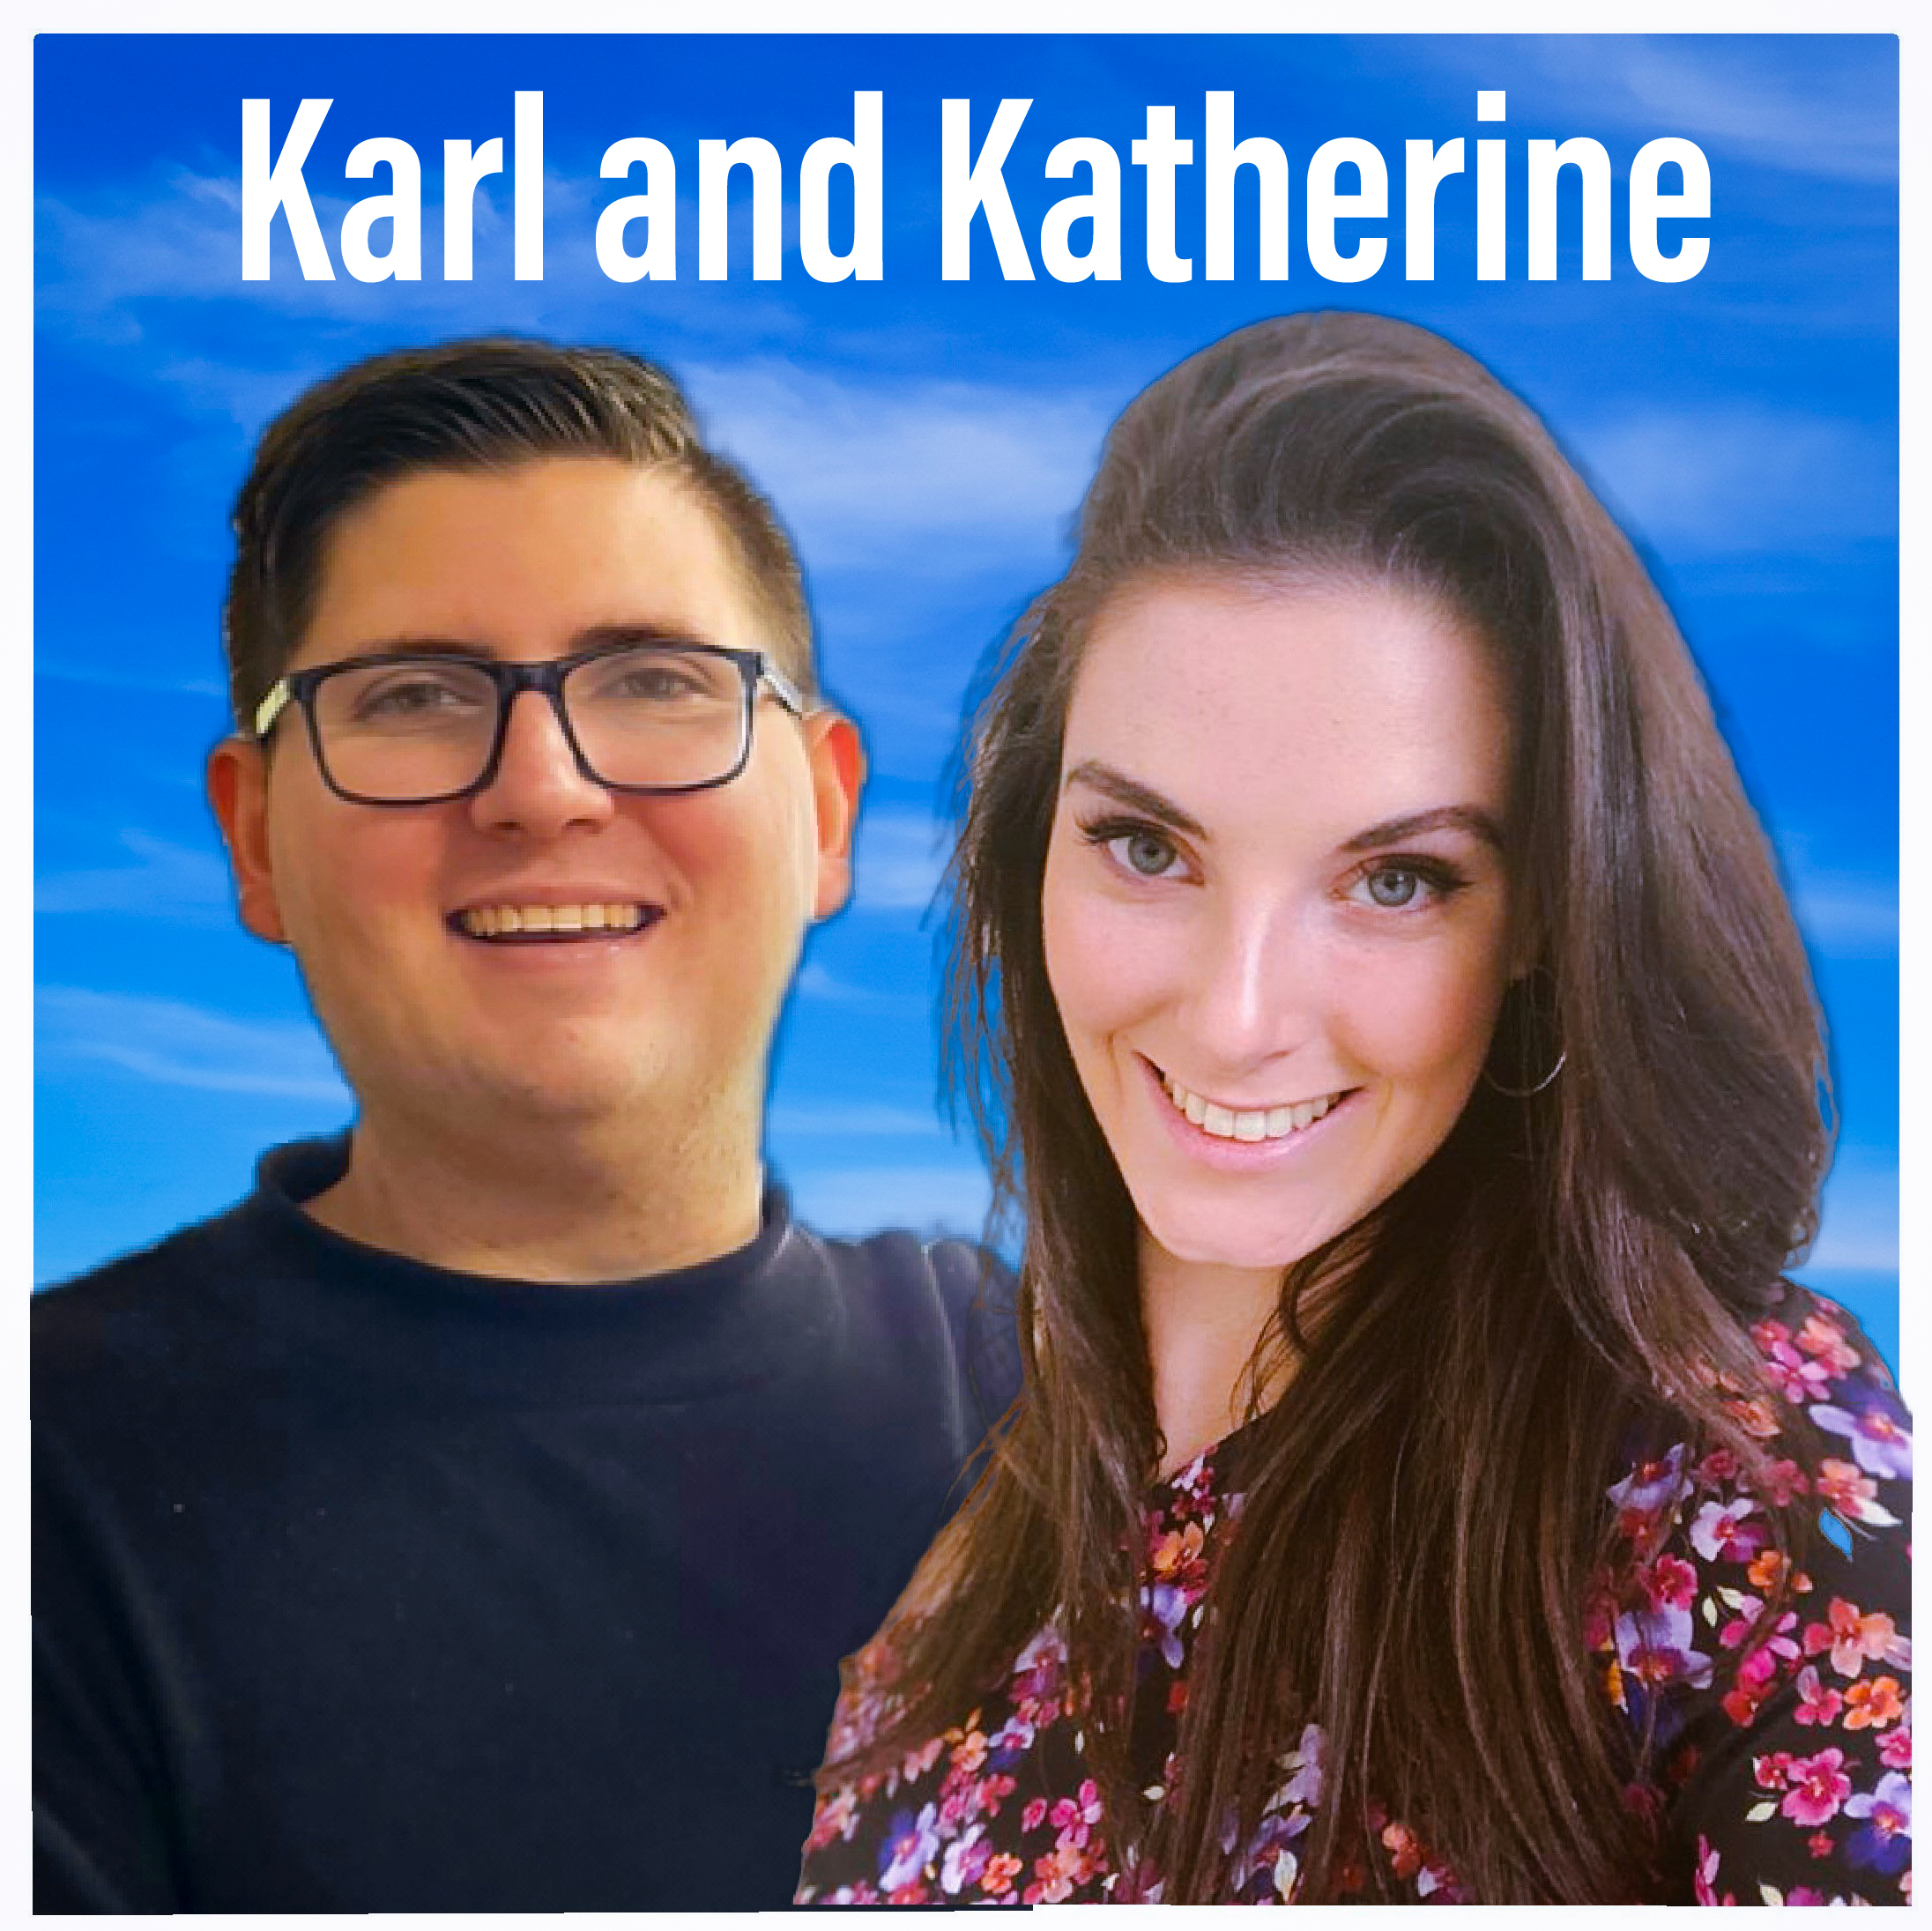 Karl and Katherine - Friday 10th September 2021